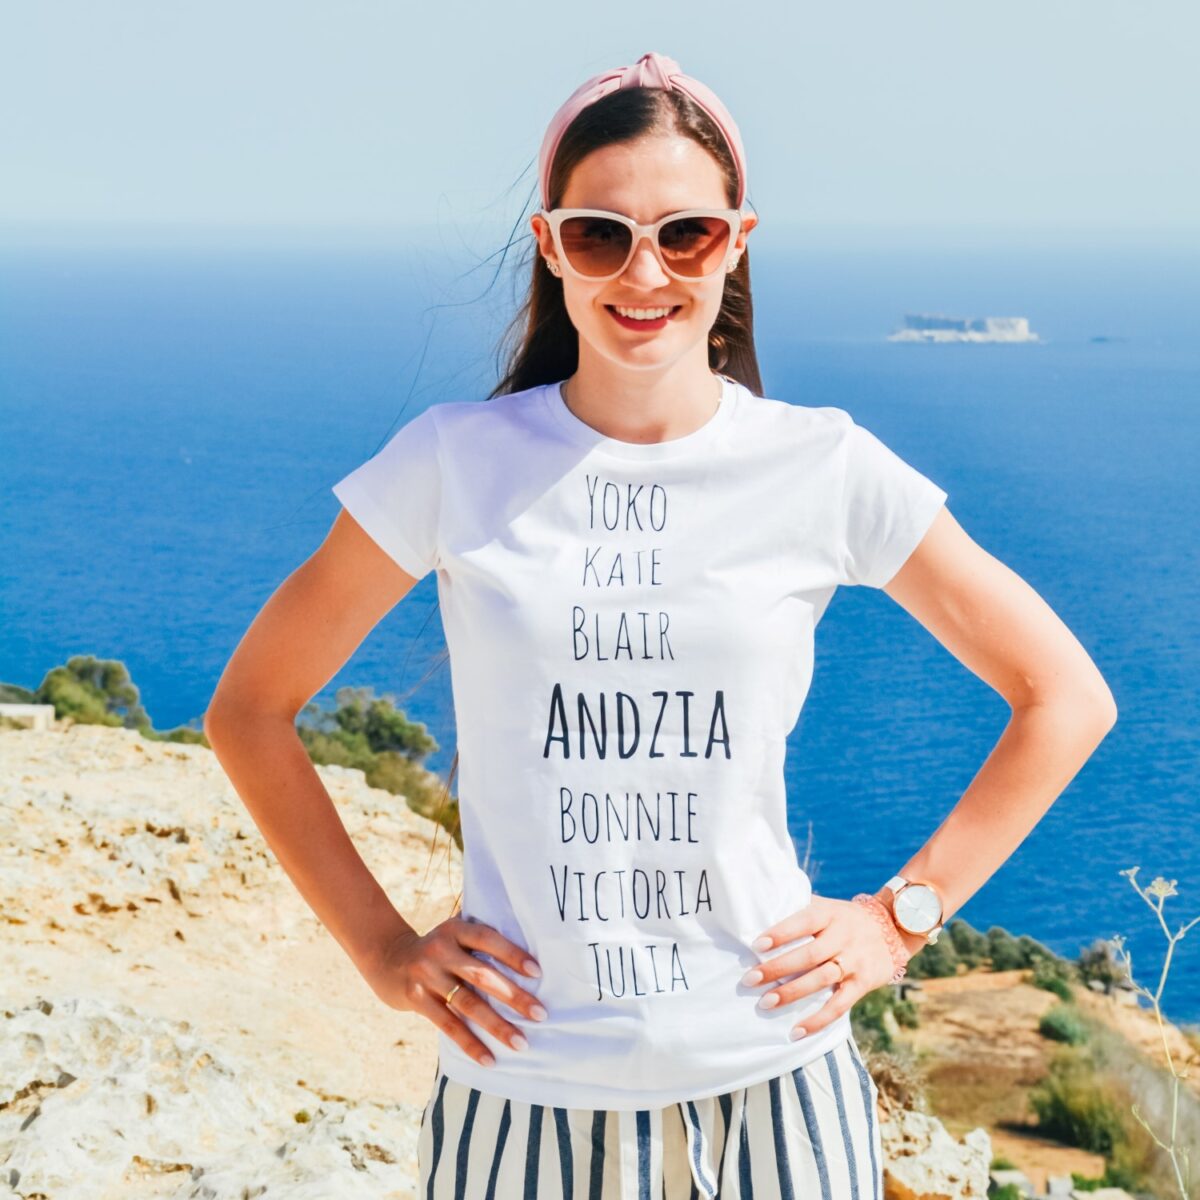 Śląskie koszulki "Andzia & Bercik" - bele kaj - blog po śląsku